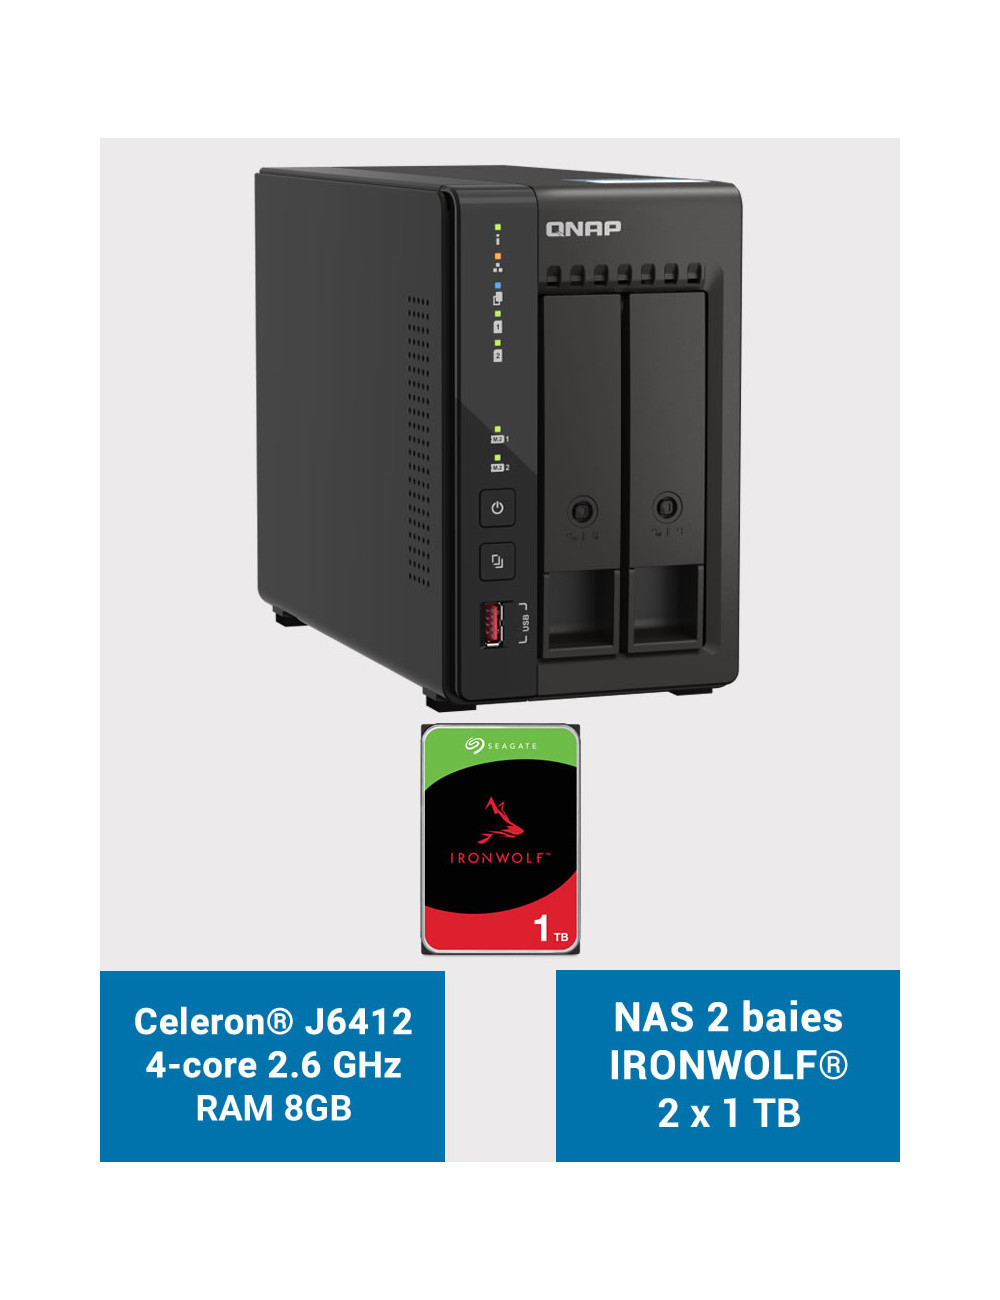 QNAP TS-253E 8GB NAS Server 2 bays IRONWOLF 2TB (2x1TB)